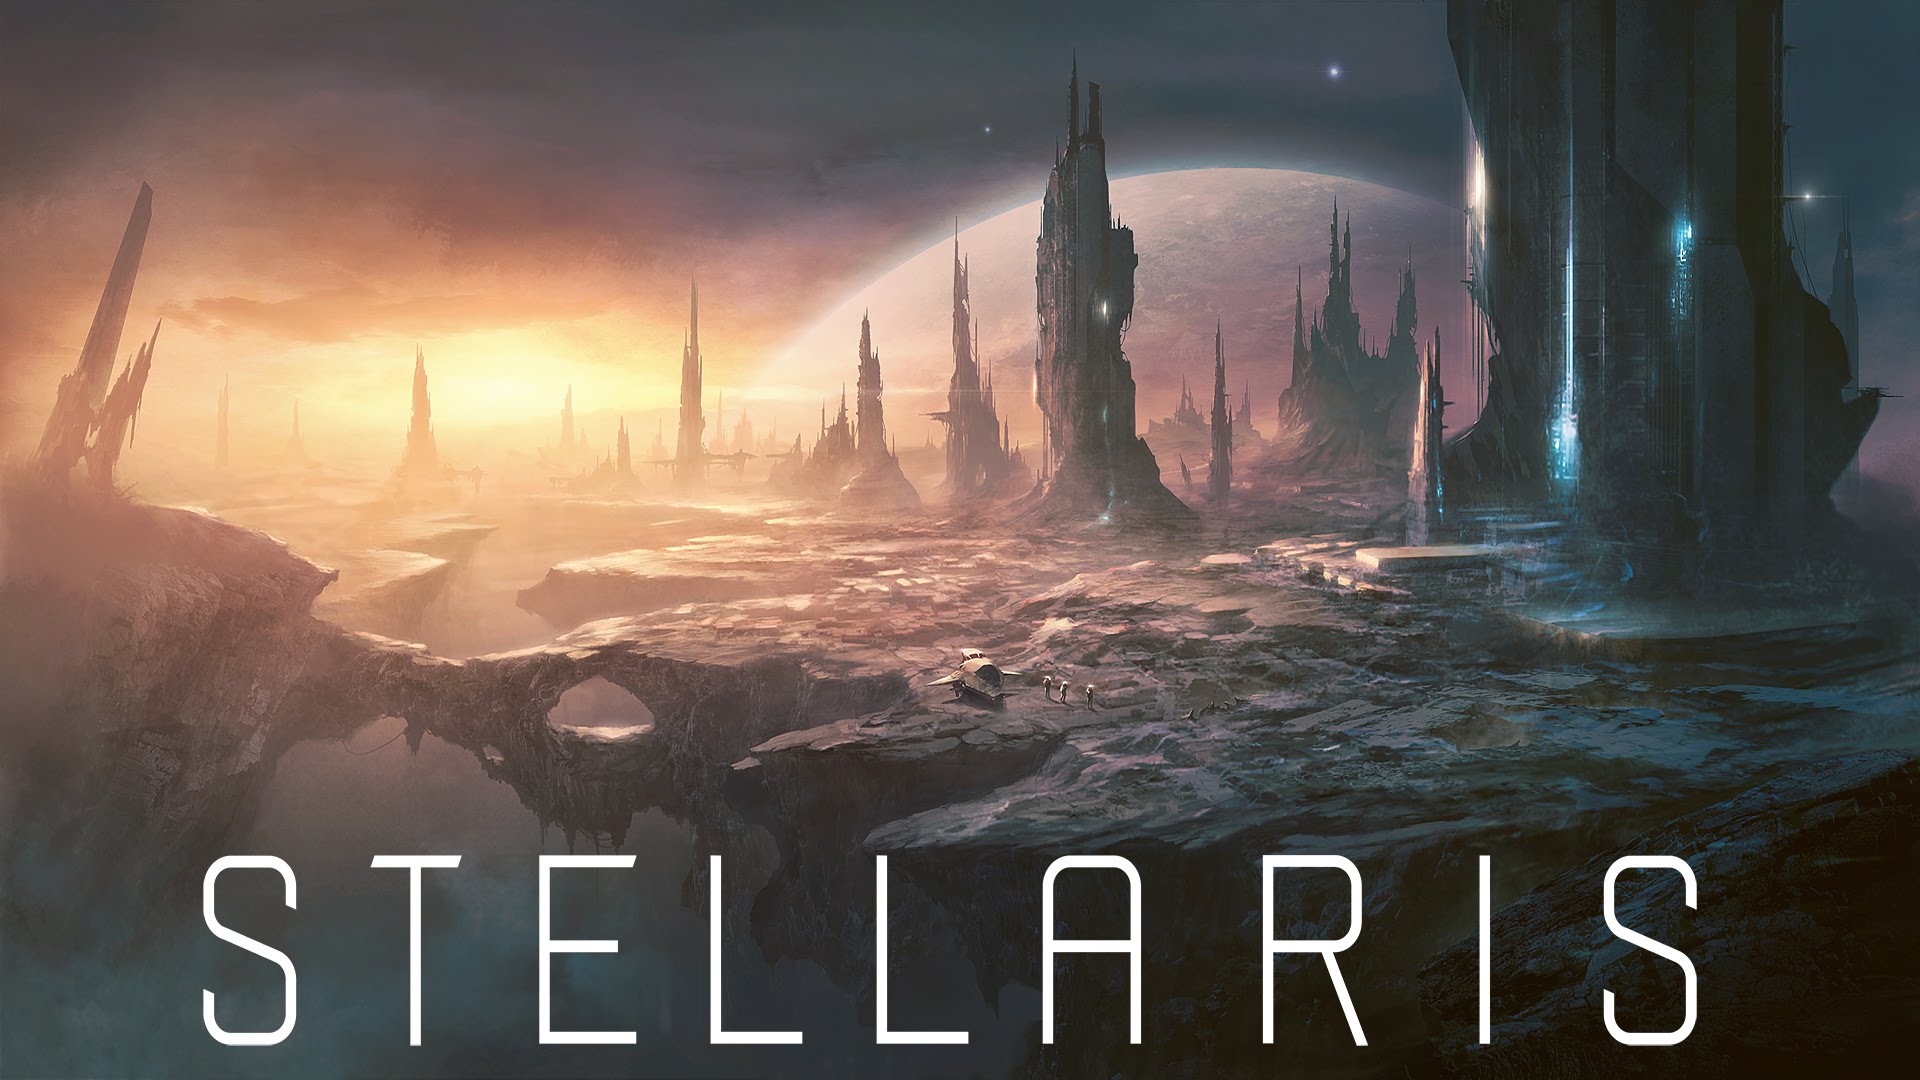 stellaris-1